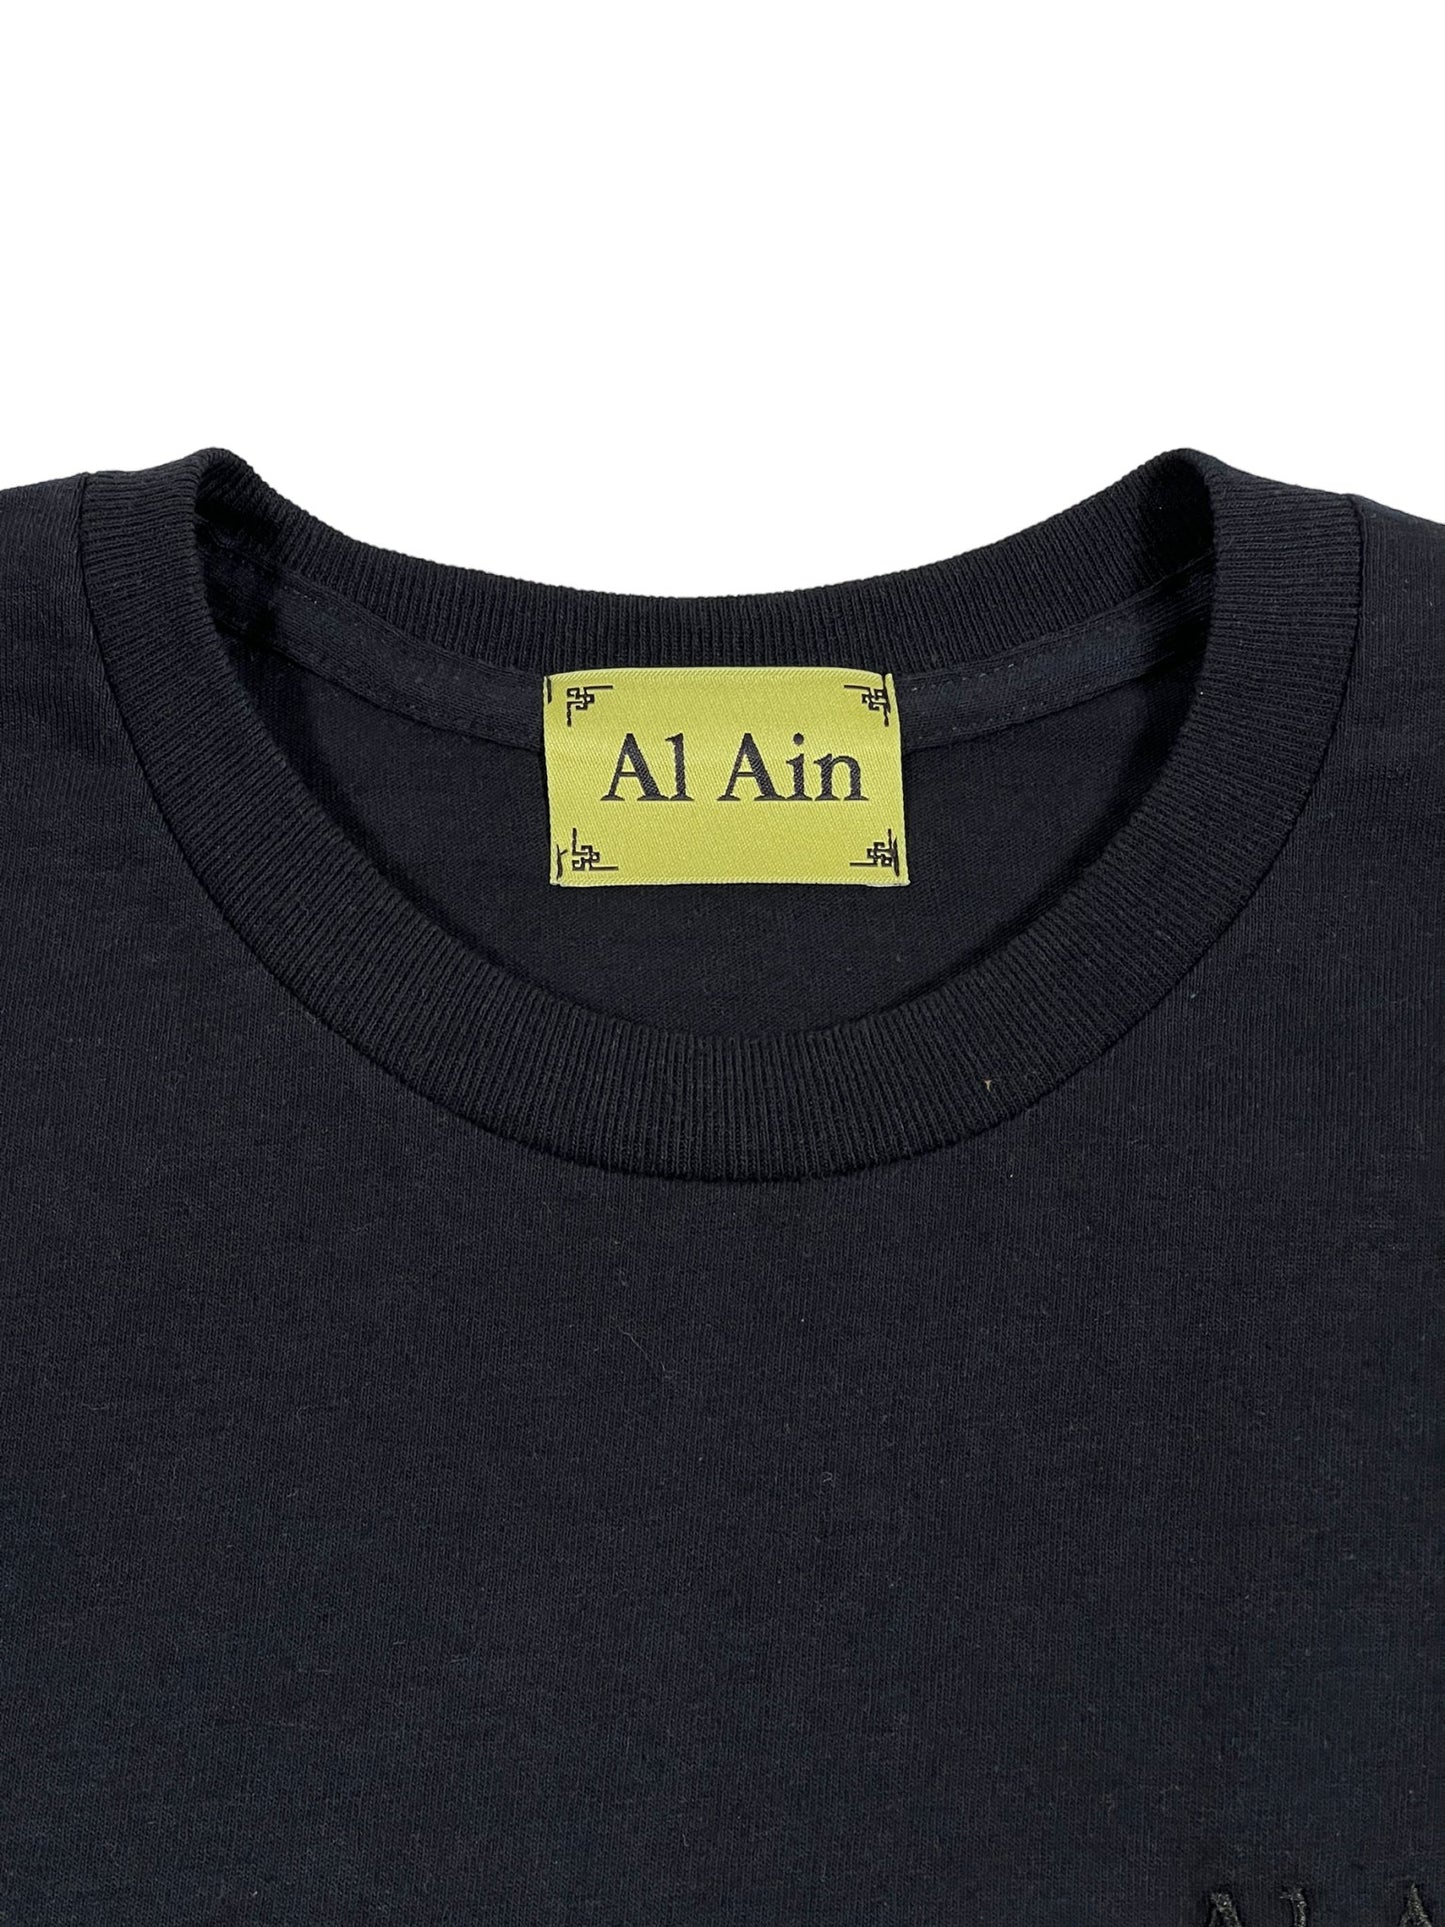 Close-up of a black AL AIN AMHX S120 JABALIA NOIR graphic t-shirt's neckline with an embroidered AL AIN brand name label.